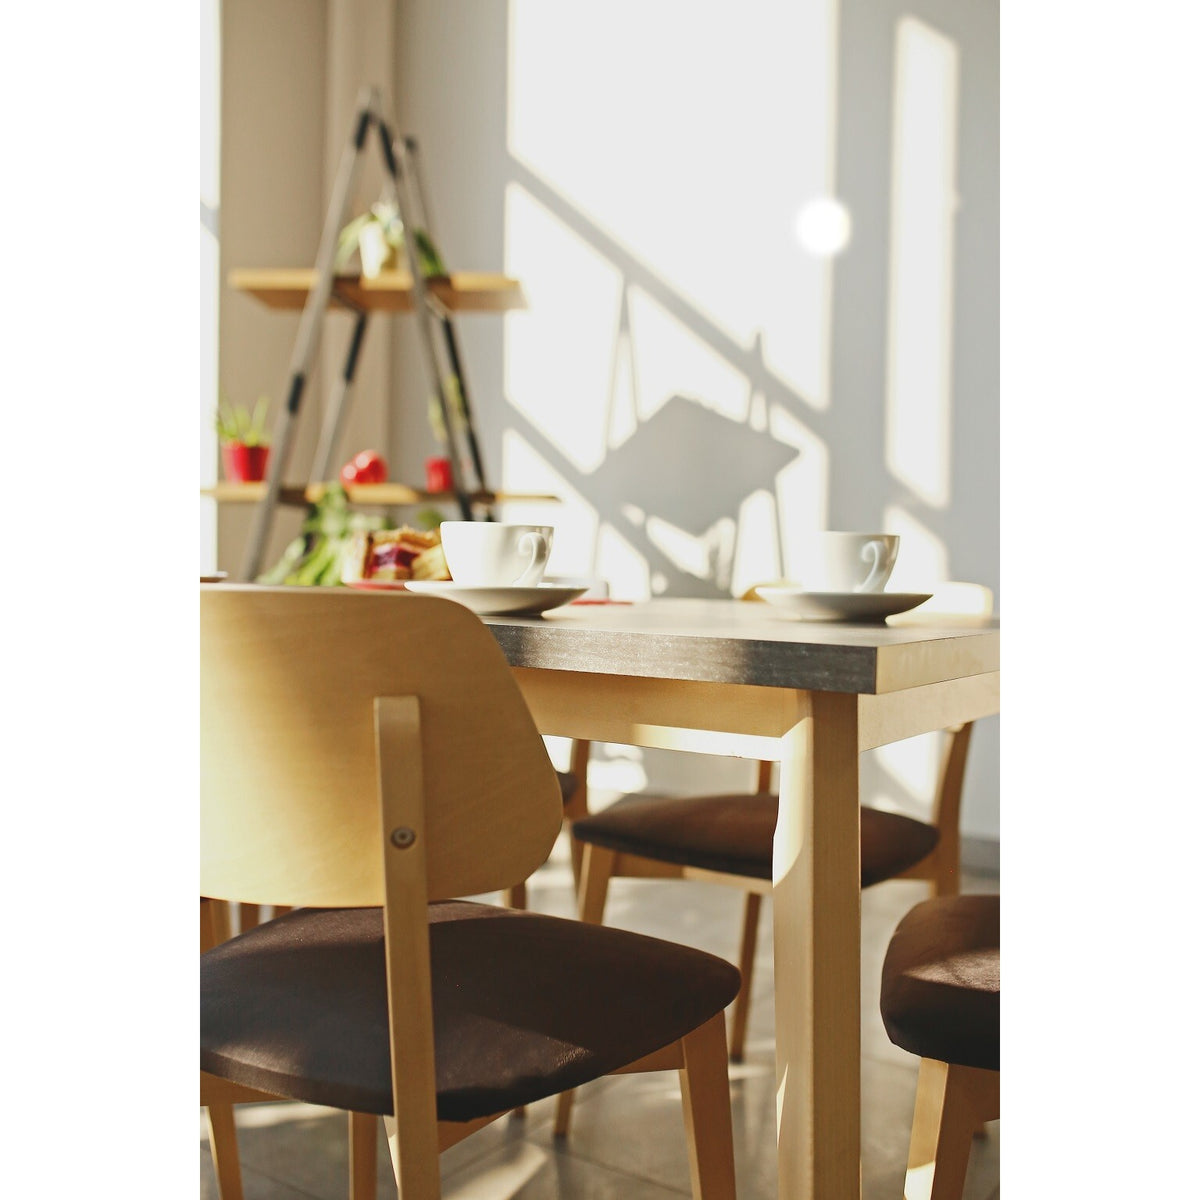 Jedálenský stôl Ombo rozkladací 150-190x76,5x80 cm (dub, betón)